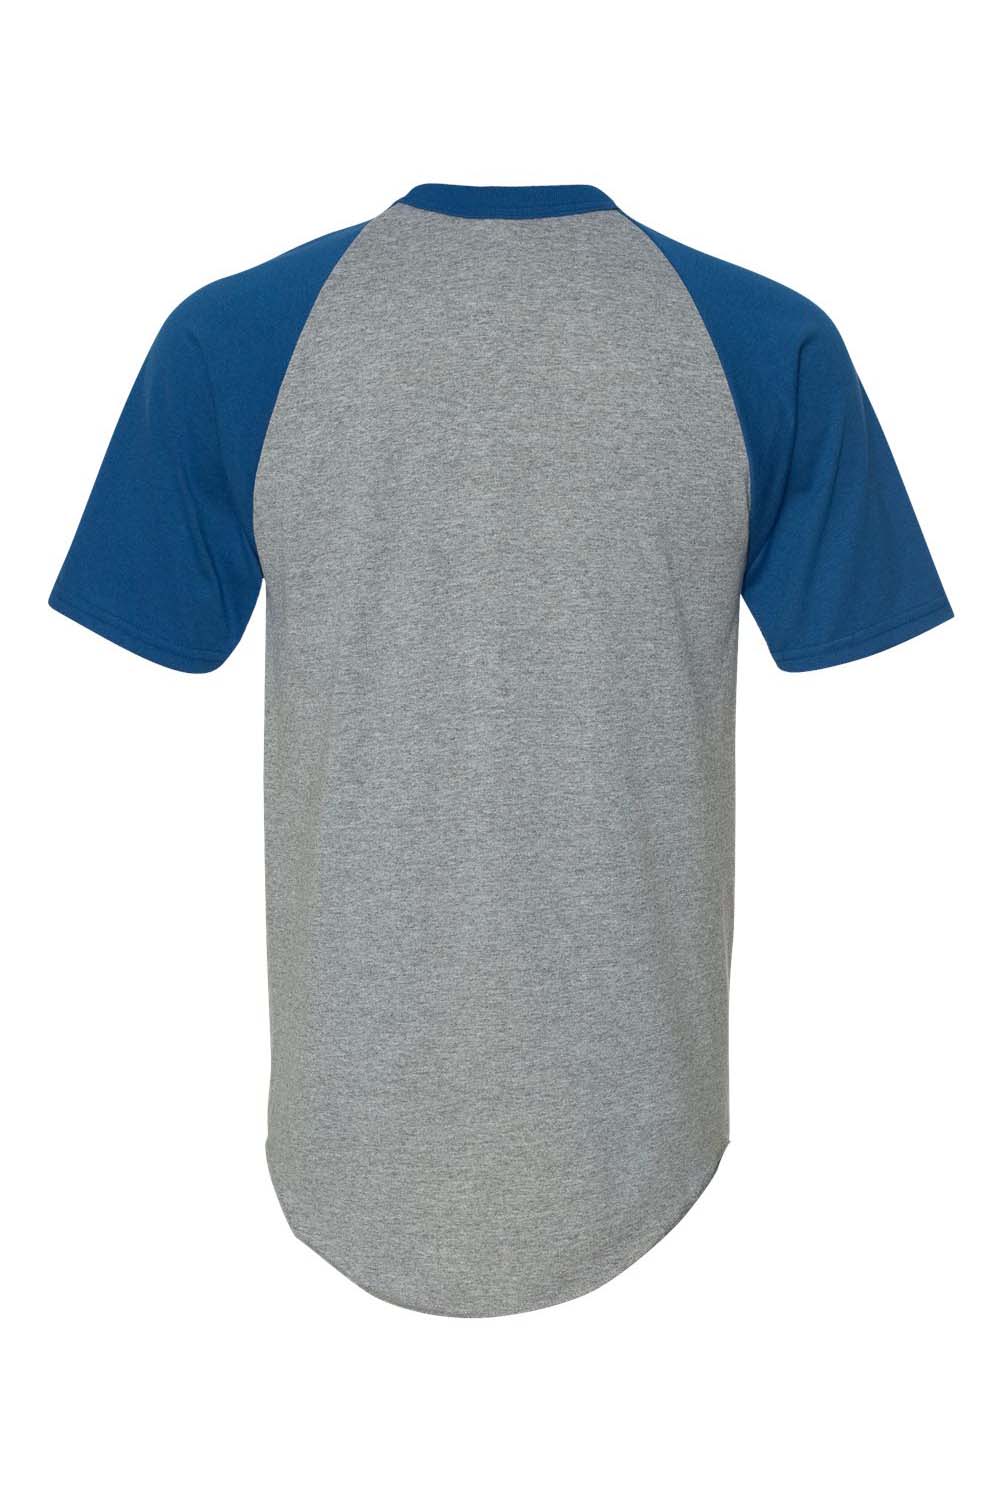 Augusta Sportswear 423 Mens Short Sleeve Crewneck T-Shirt Heather Grey/Royal Blue Model Flat Back